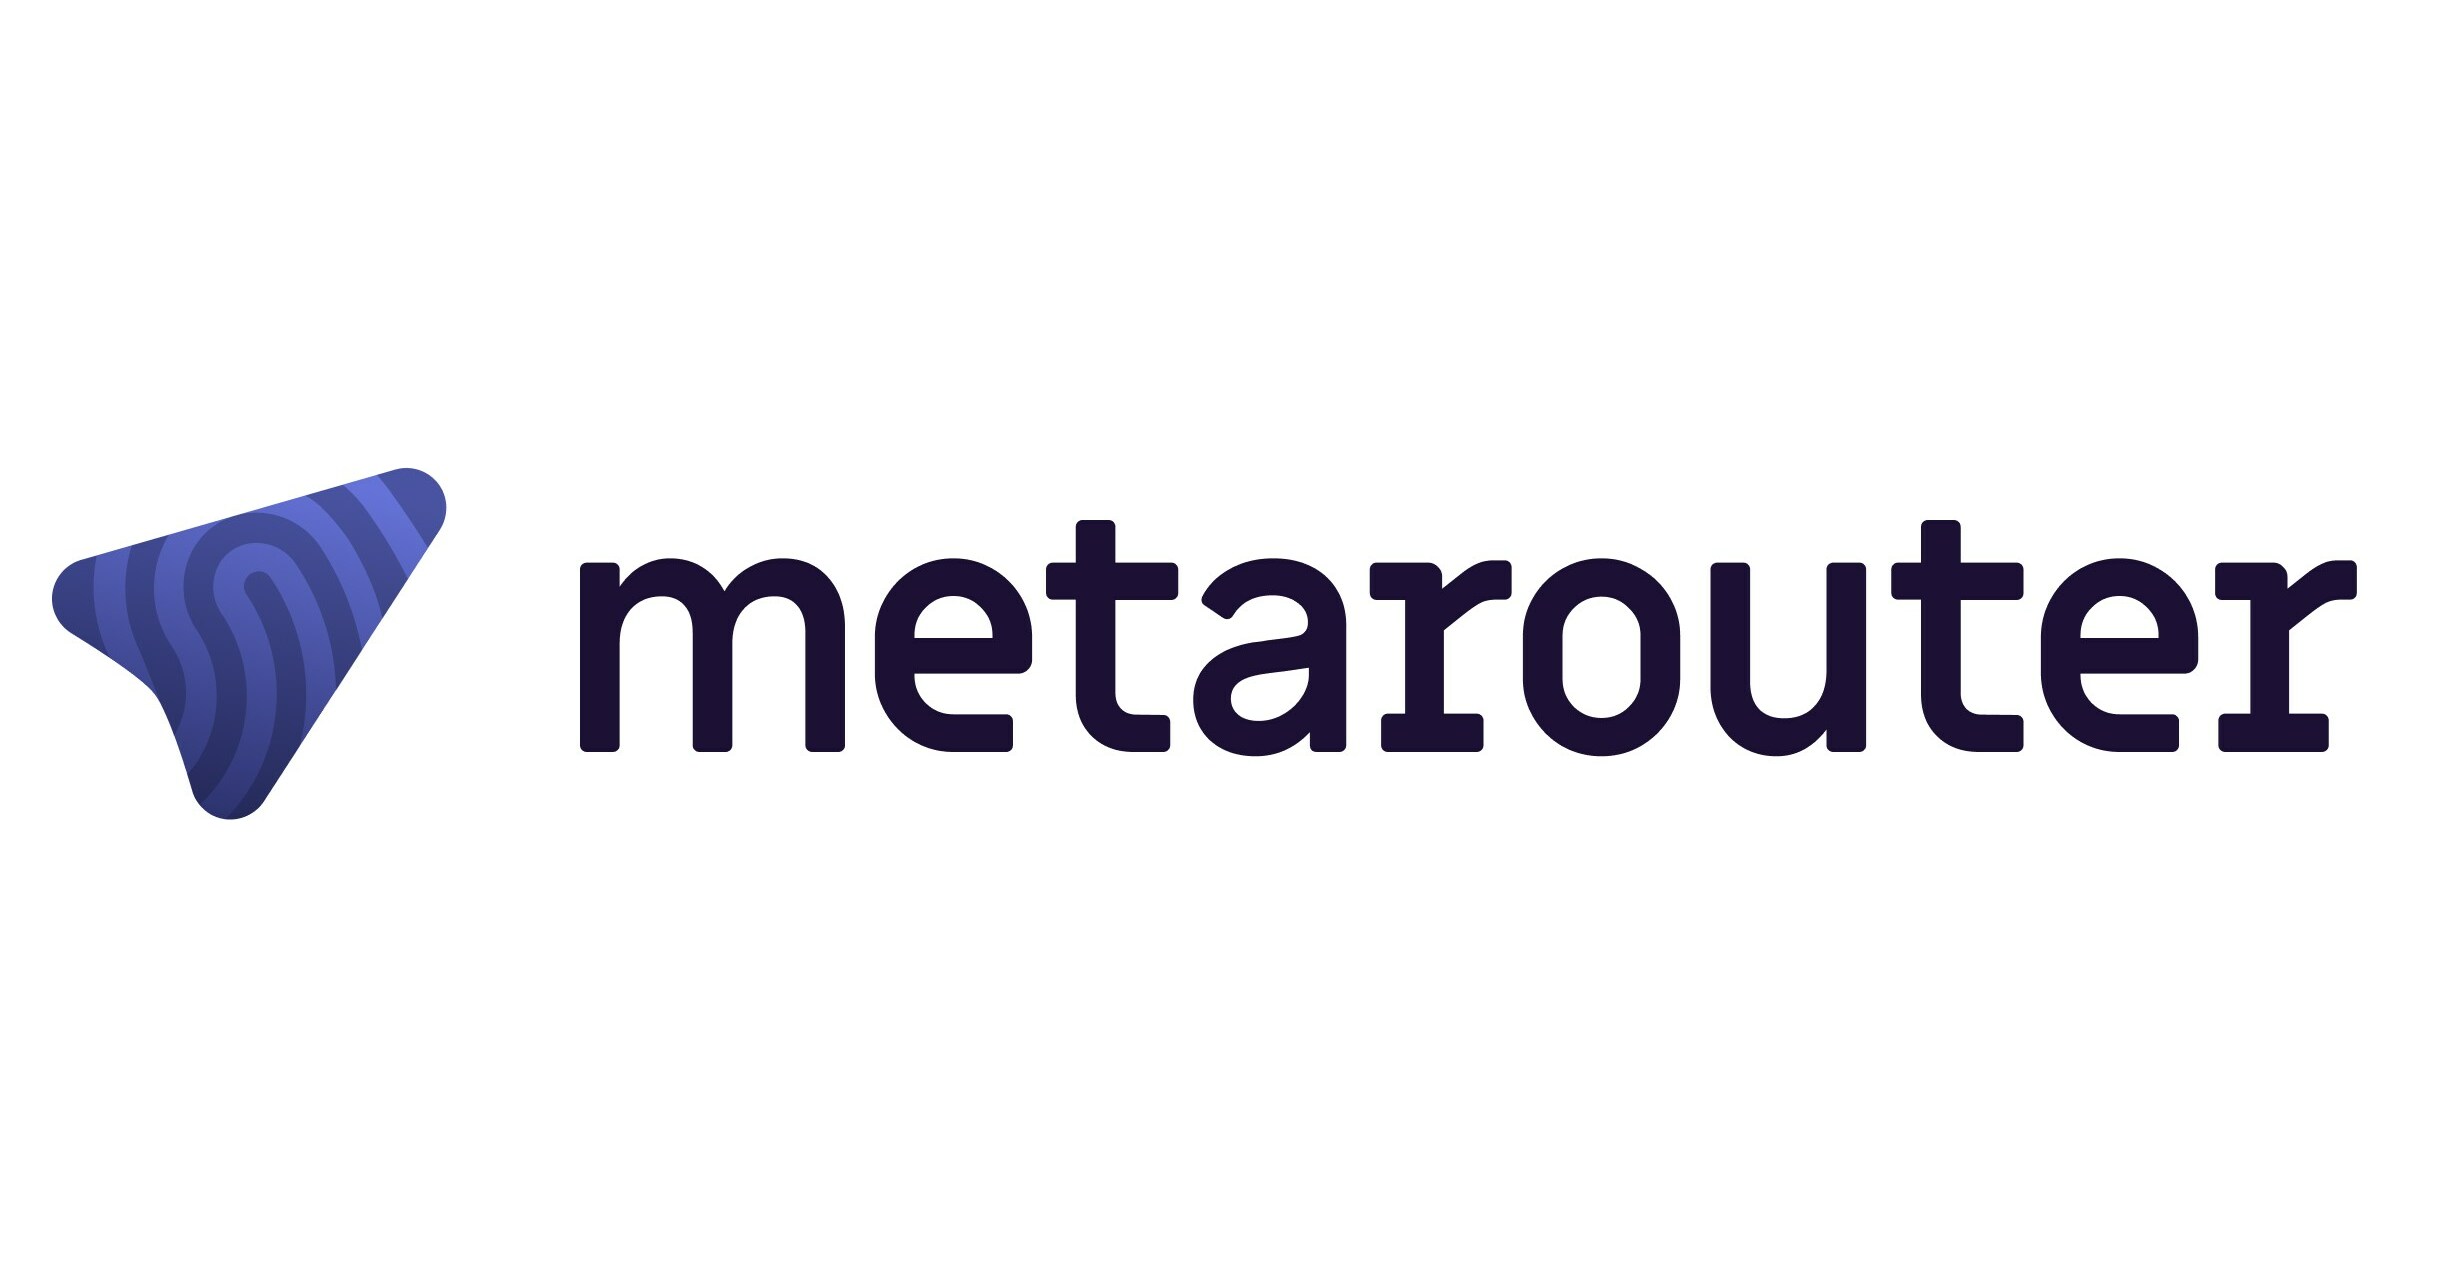 MetaRouter推出“加速”以加快向服务器端数据收集的转移，推动快速影响和增强数据隐私